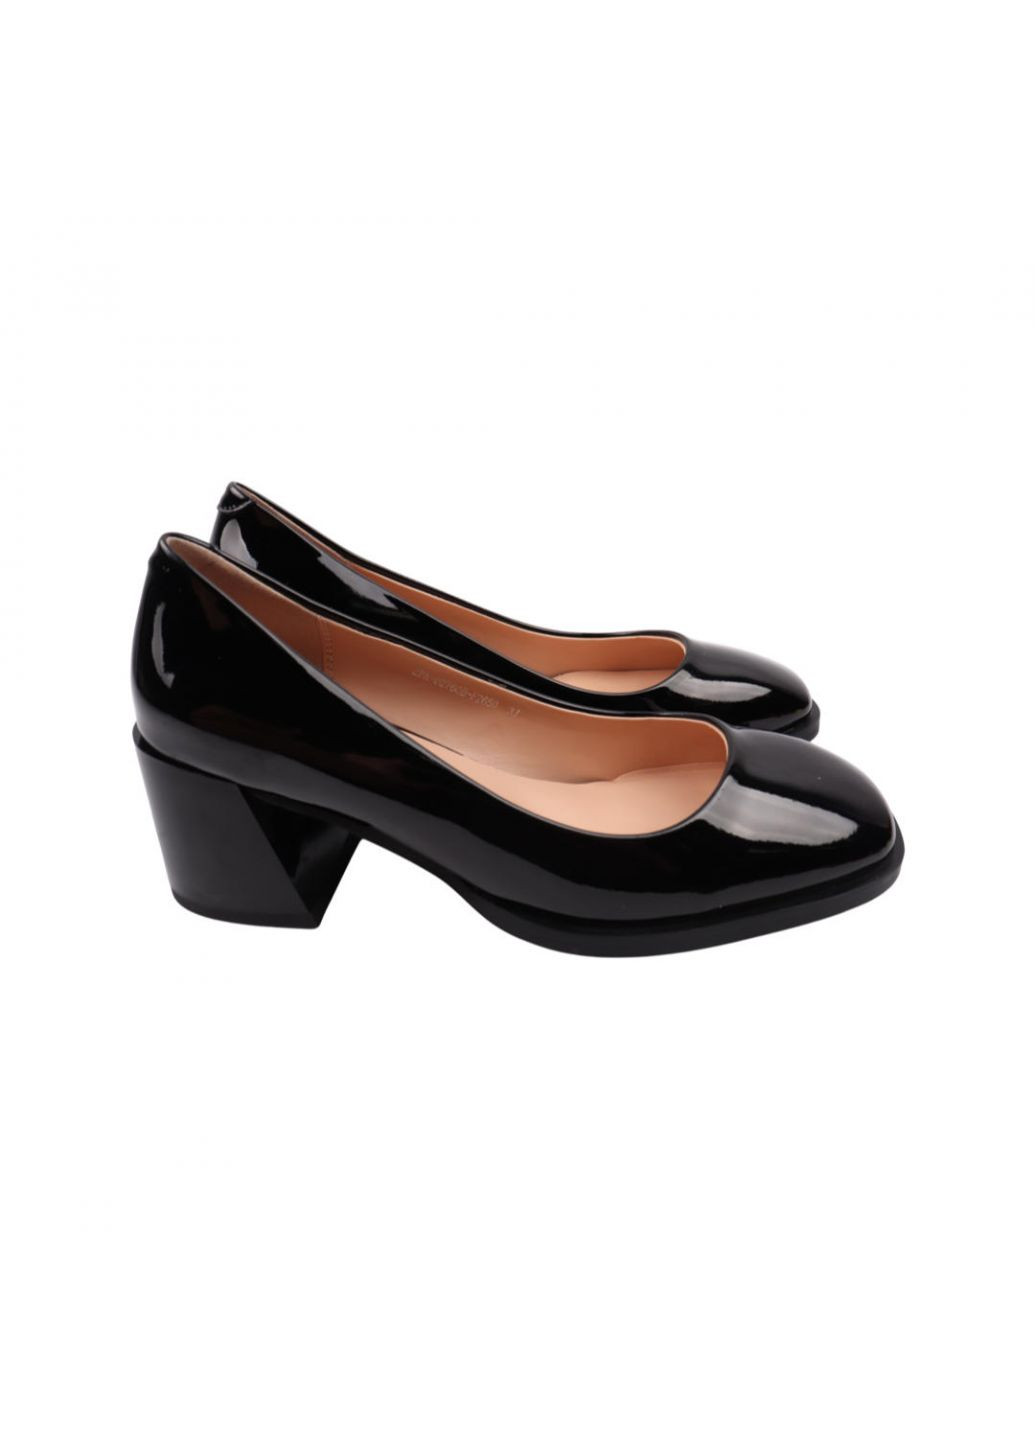 Туфлі жіночі чорні Gelsomino 247-22dt (257439494)